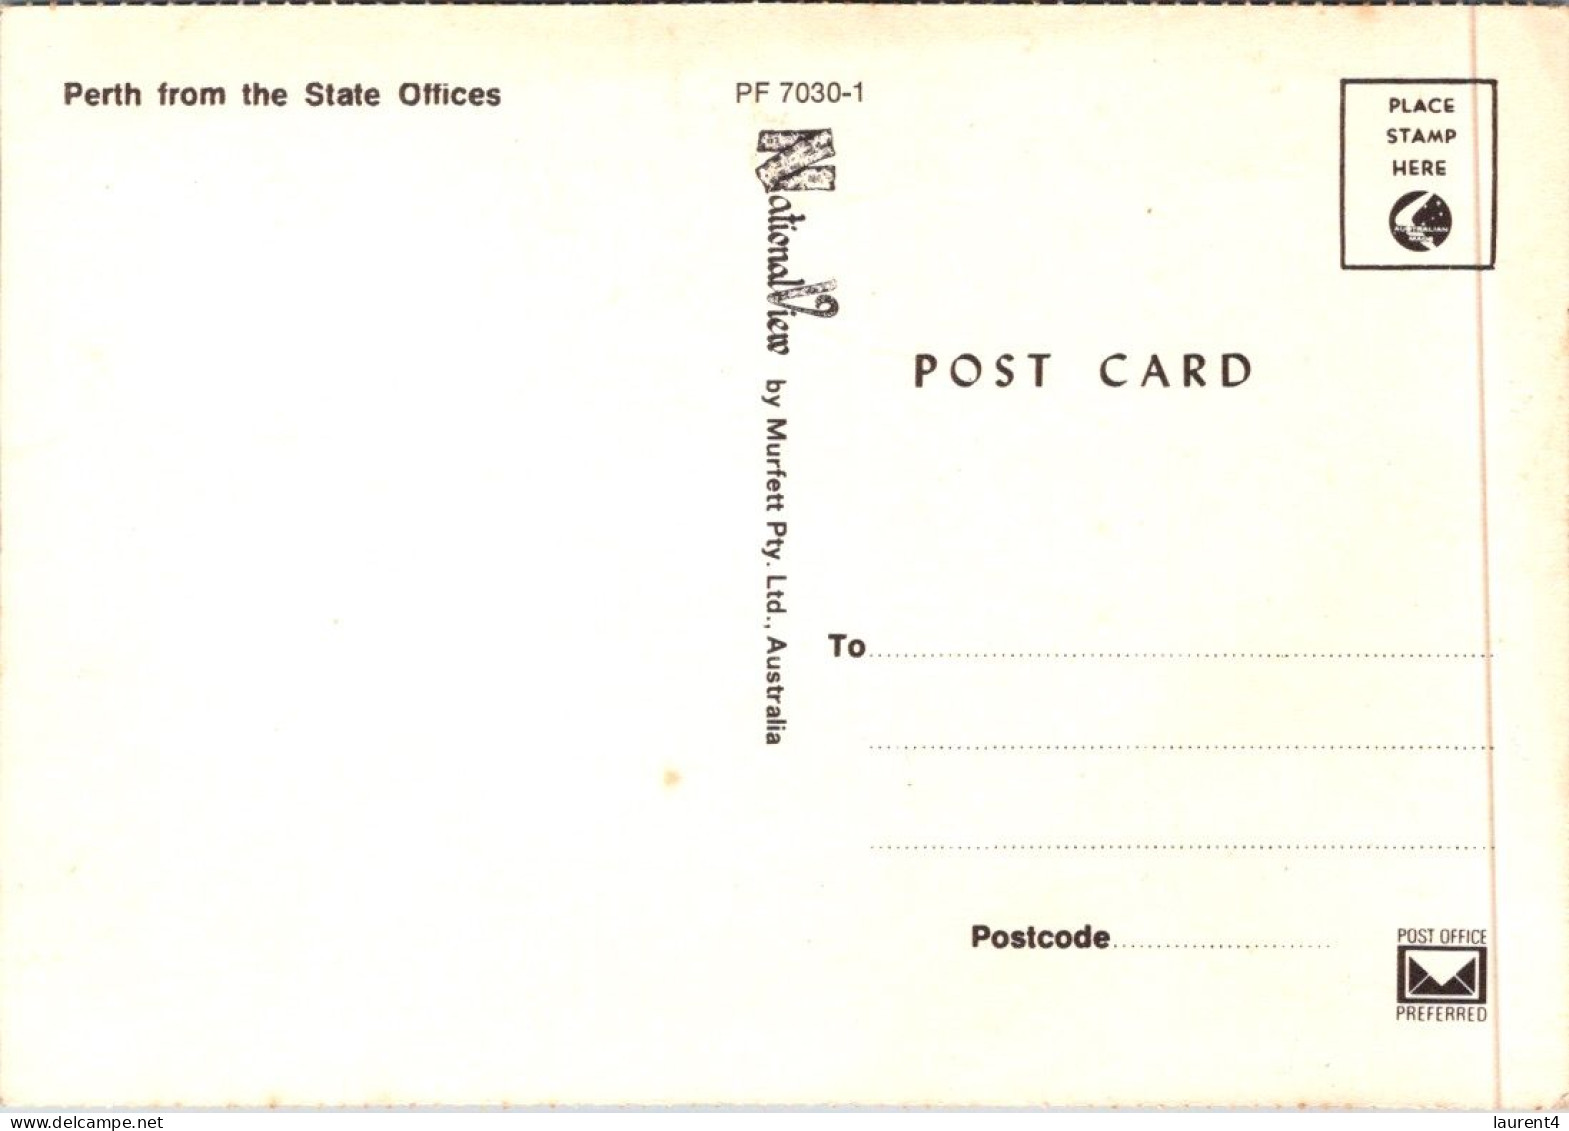 6-10-2023 (3 U 30) Australia - WA - Perth  (State Office & Black Swan) (2 Postcards) - Perth